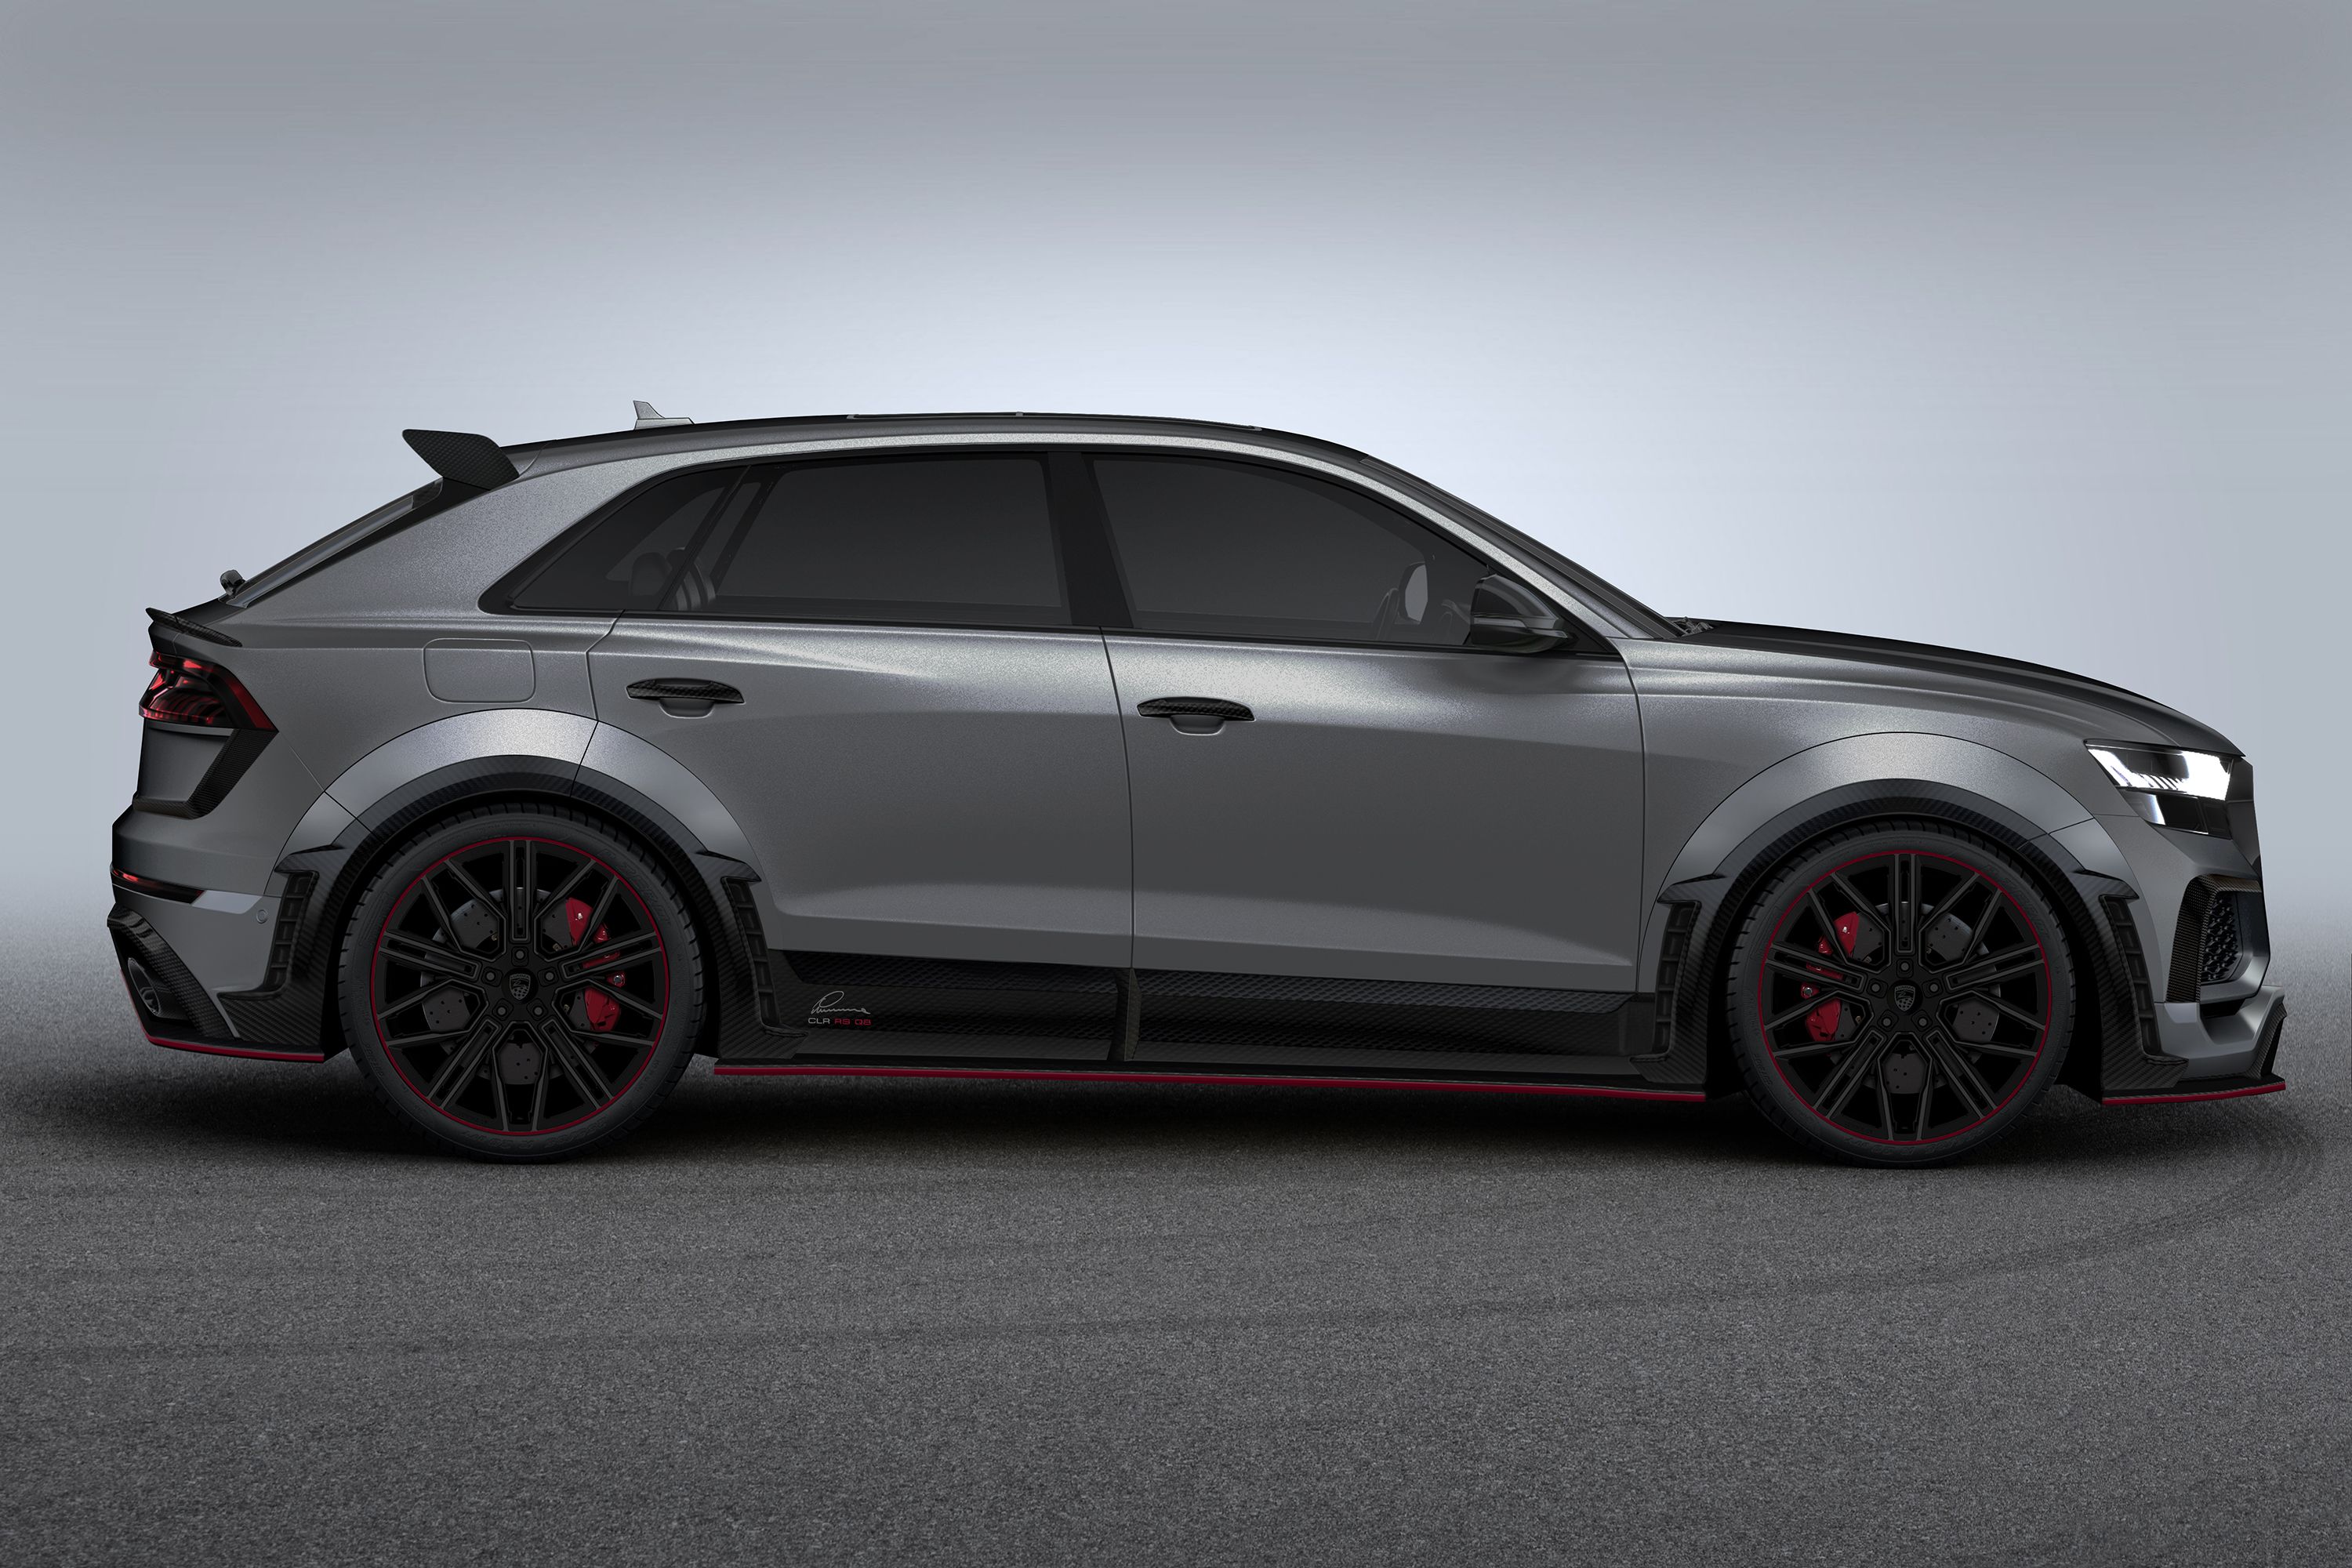 2020 Audi RS Q8 By Lumma Design